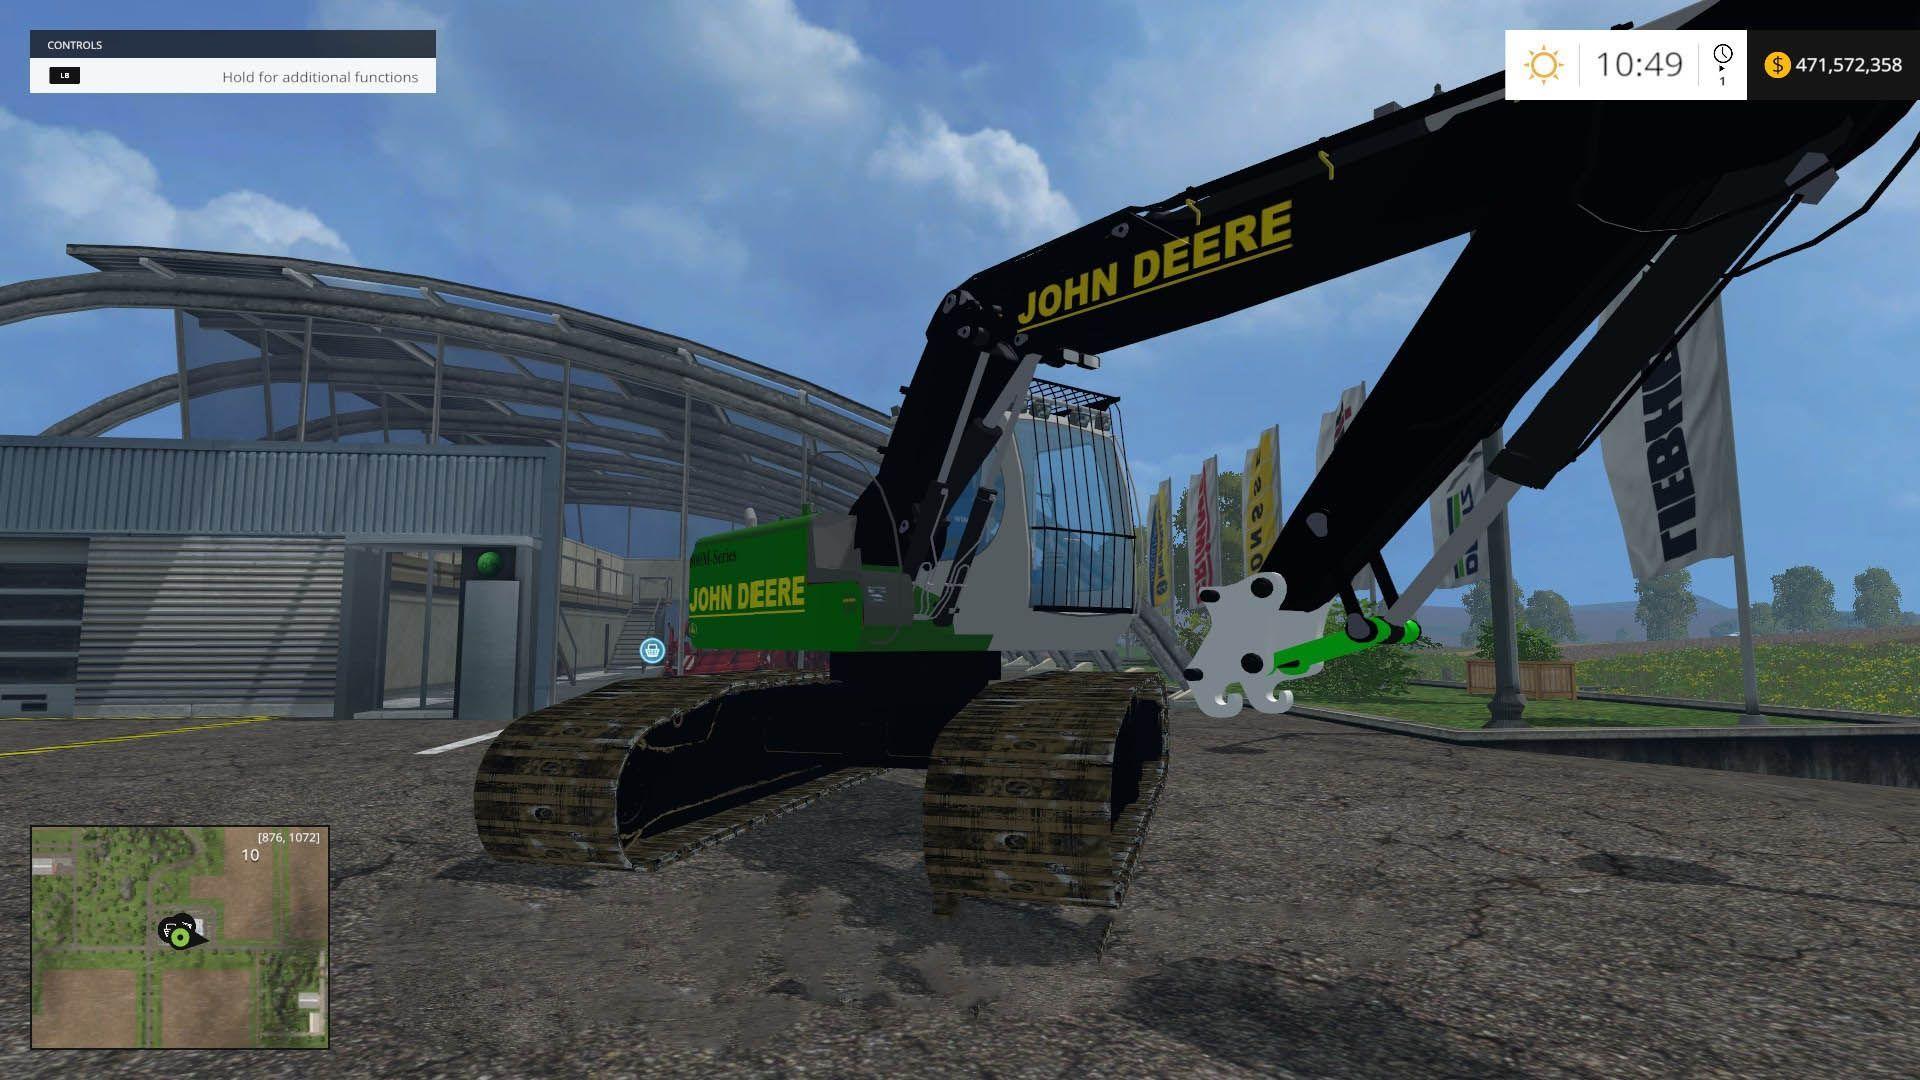 JOHN DEERE Excavator v 2.0. Farming simulator 2015 mods